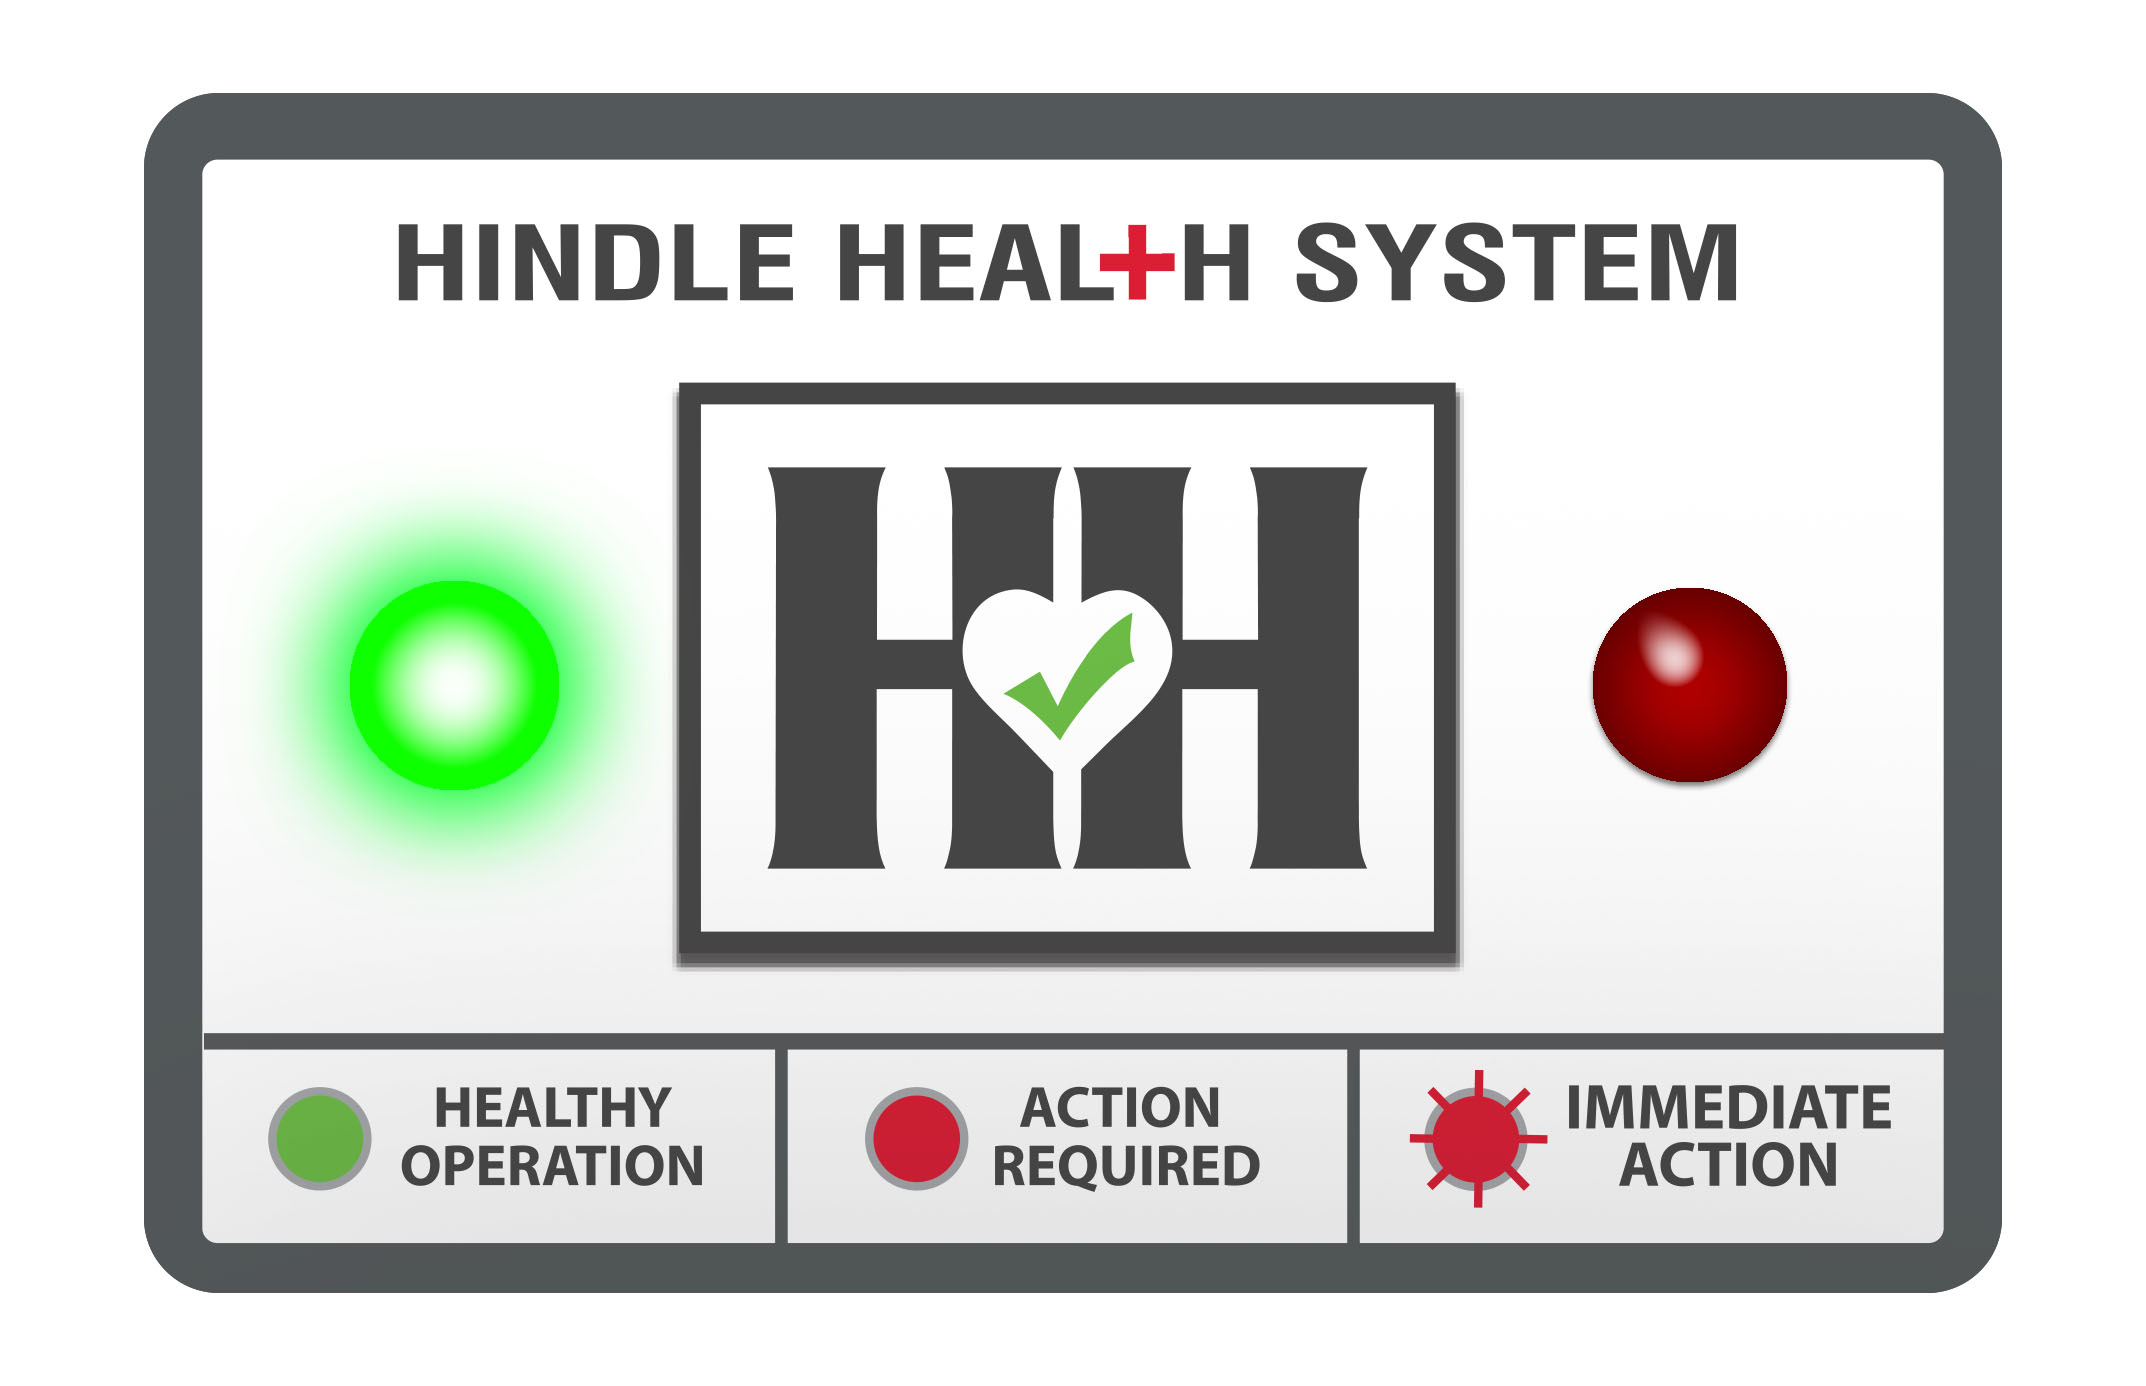 HindleHealthSystem-IndicatrorLight-Overlay-EPICConsole.jpg